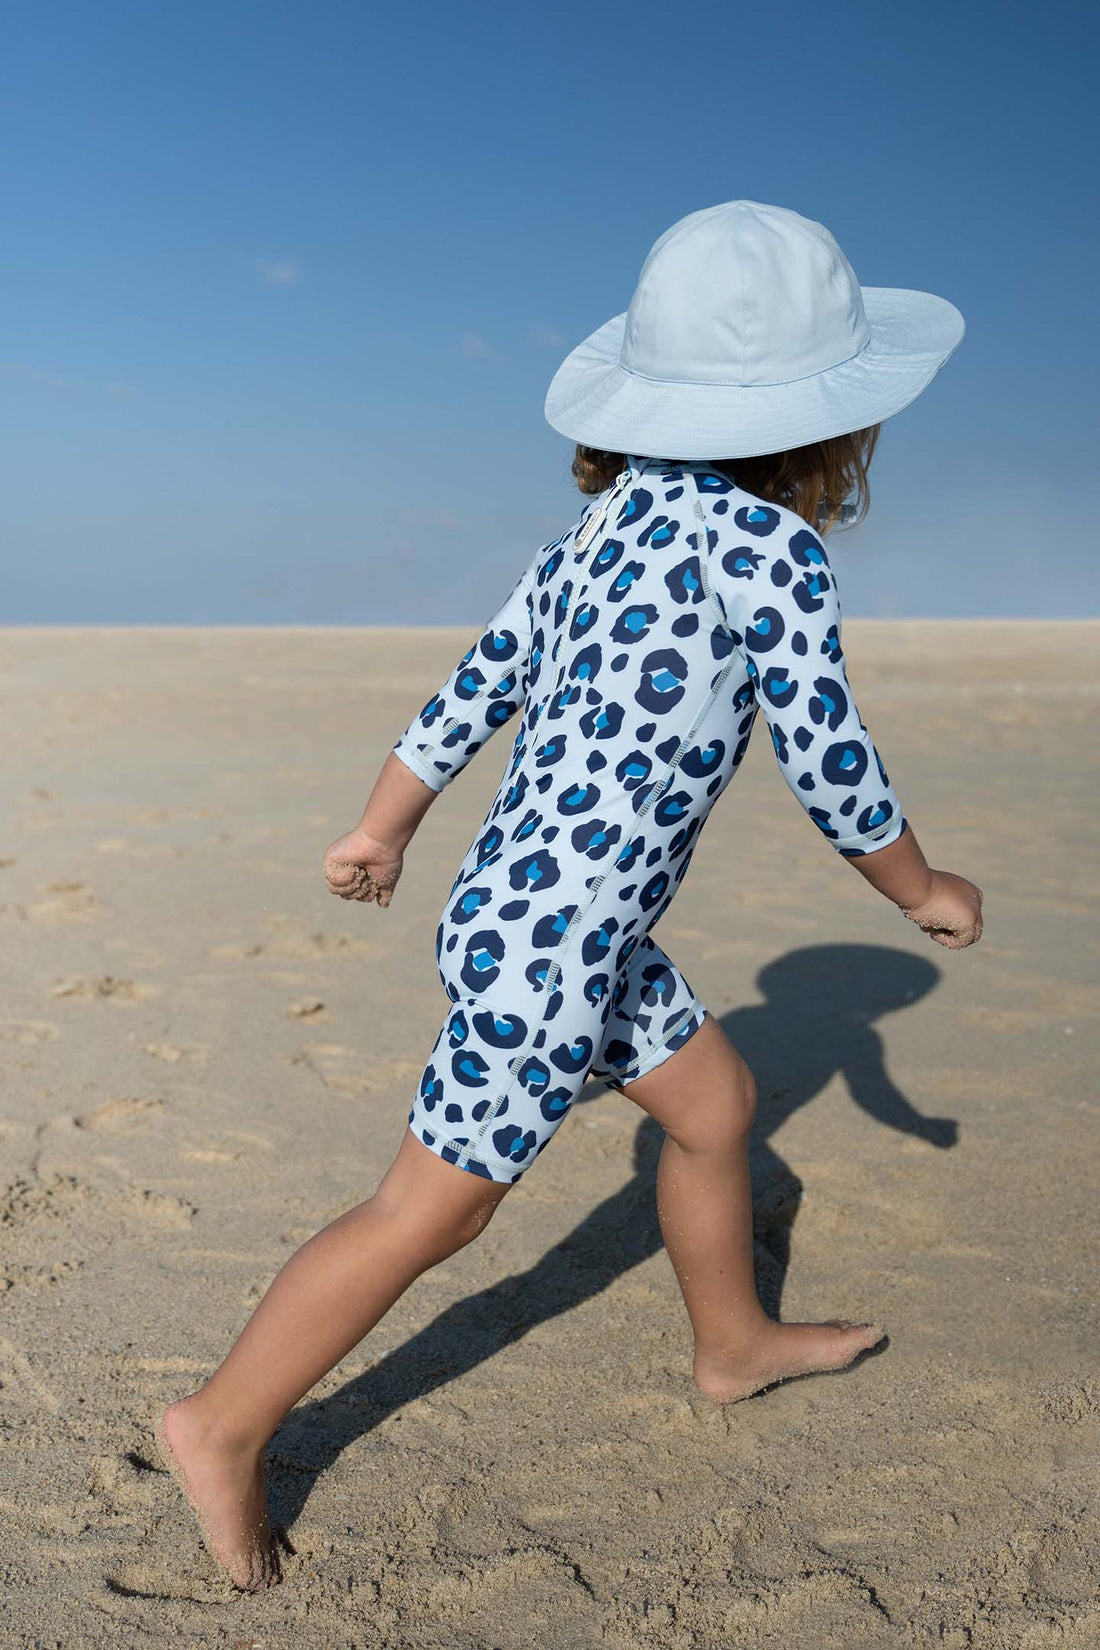 Chapéu anti-UV para bebês/meninos - Azul